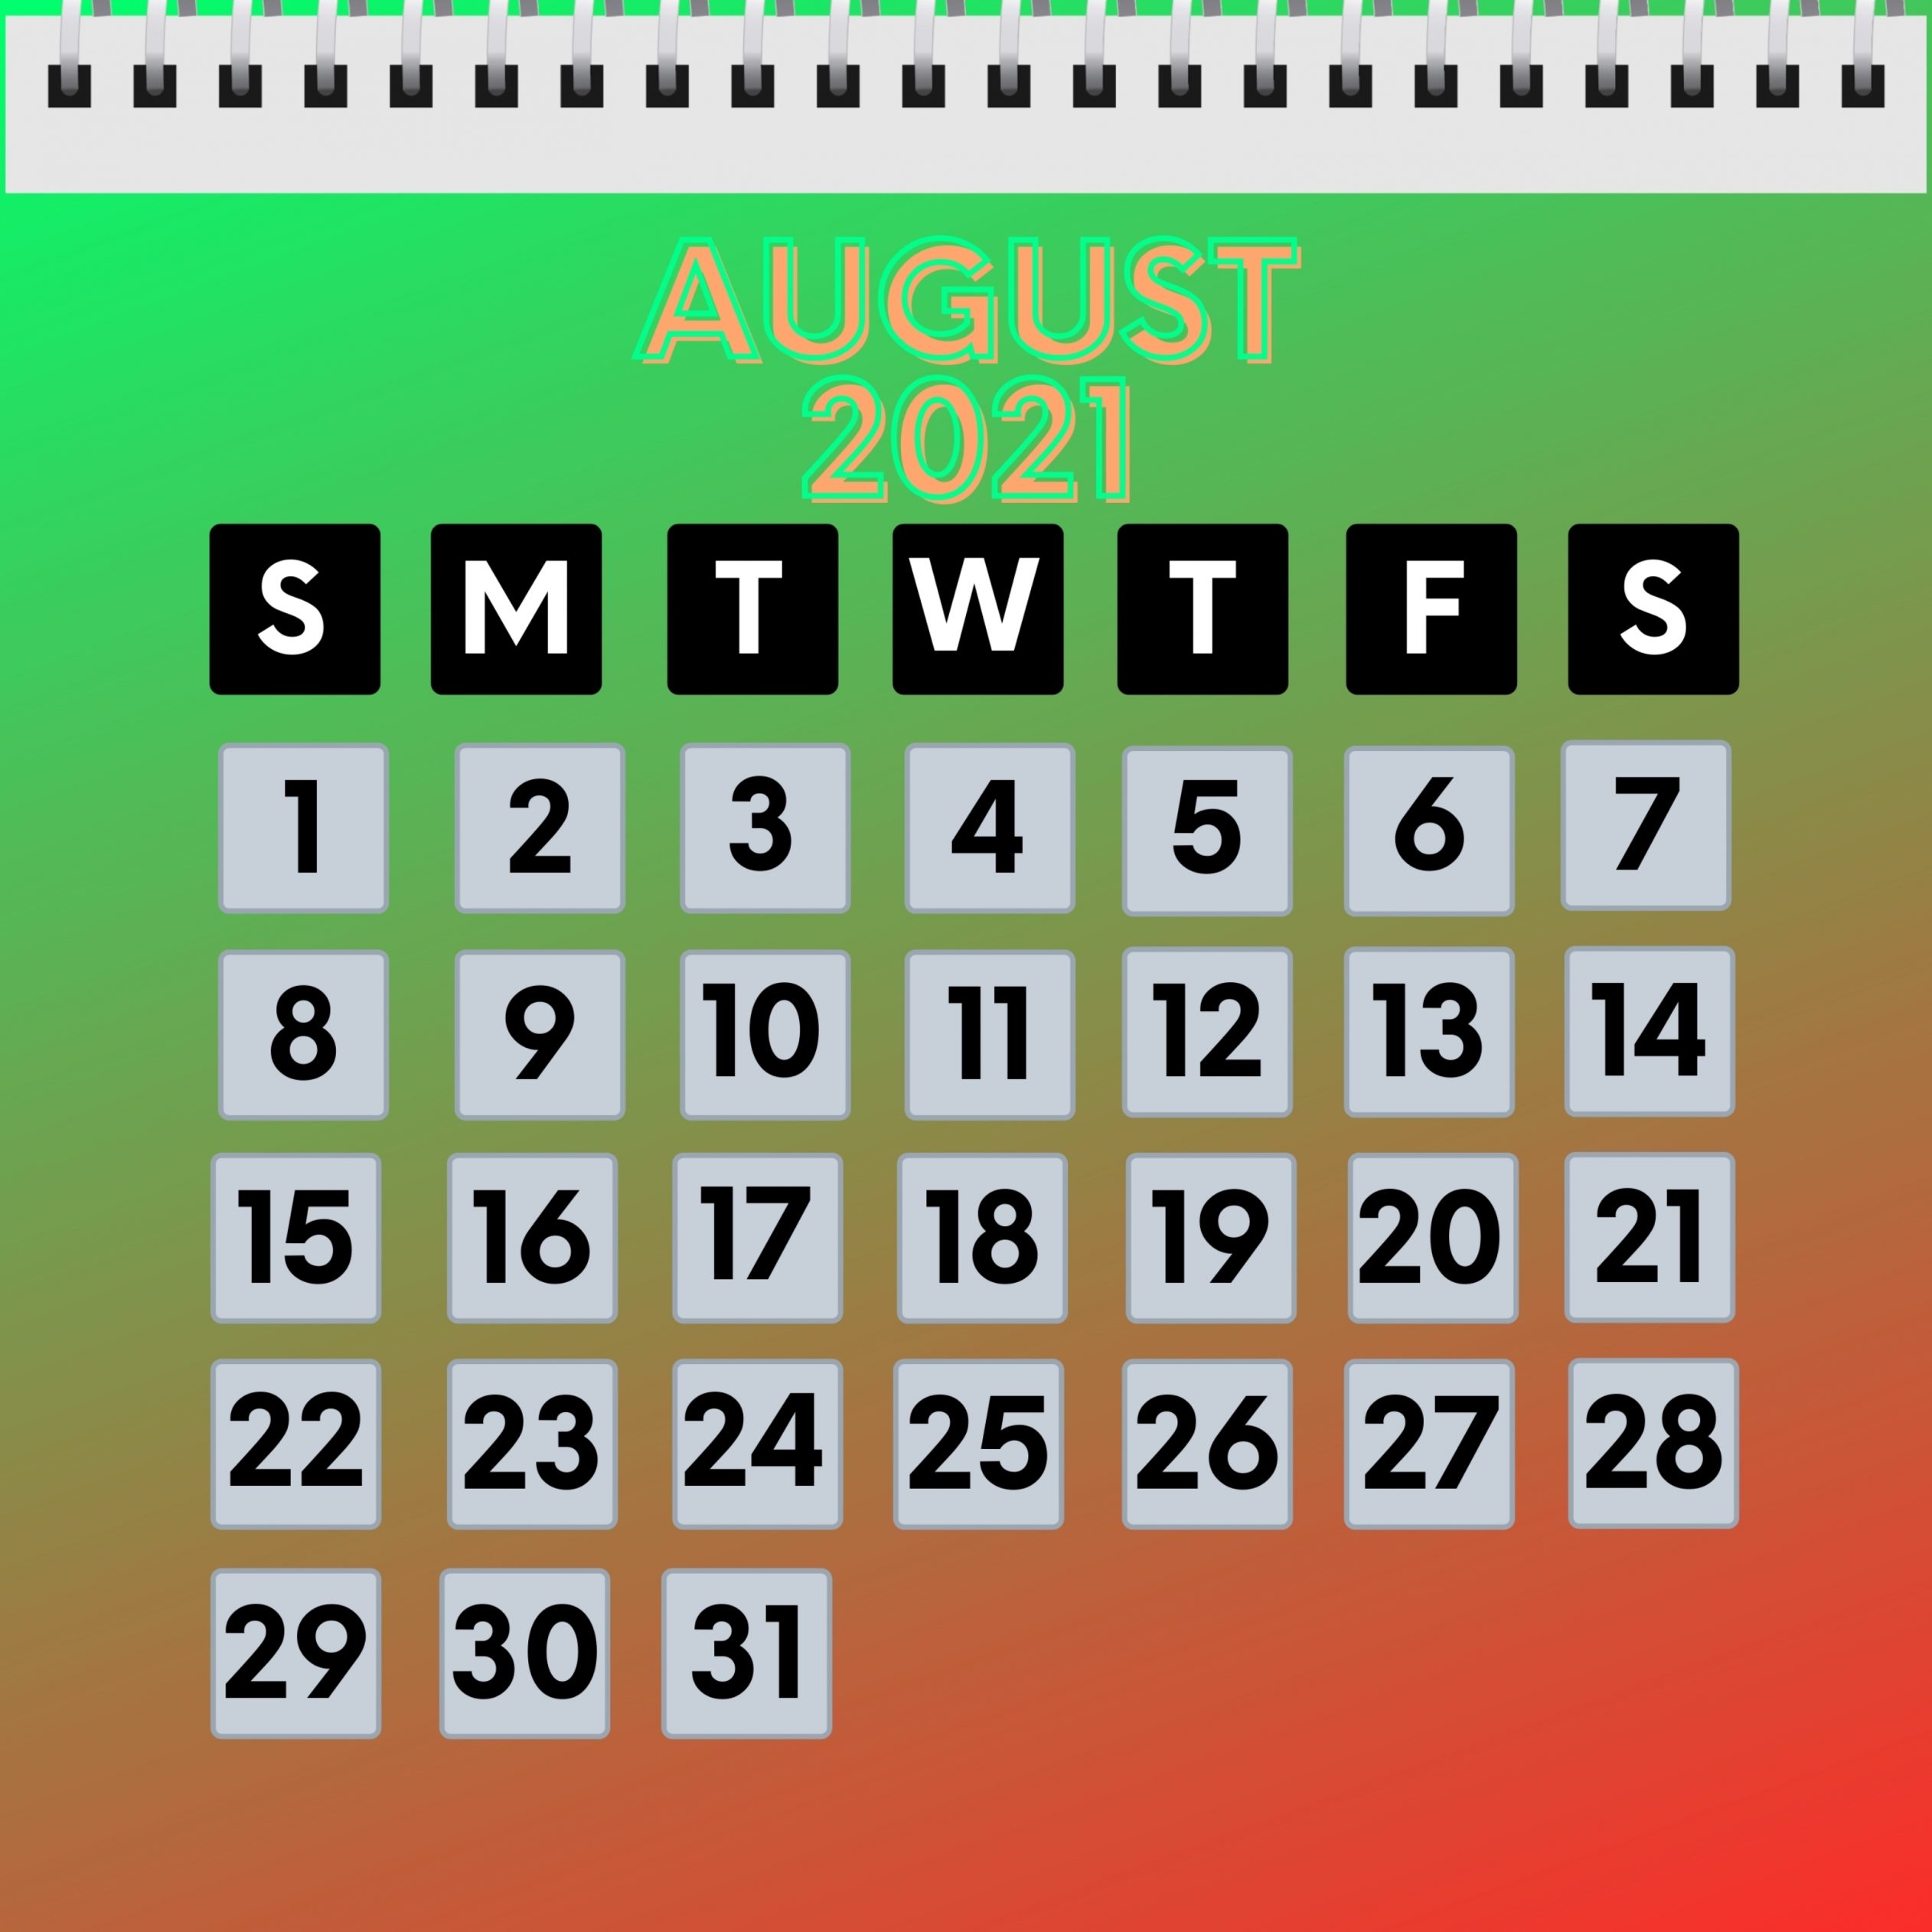 2524x2524 Parallax wallpaper 4k August 2021 Calendar iPad Wallpaper 2524x2524 pixels resolution